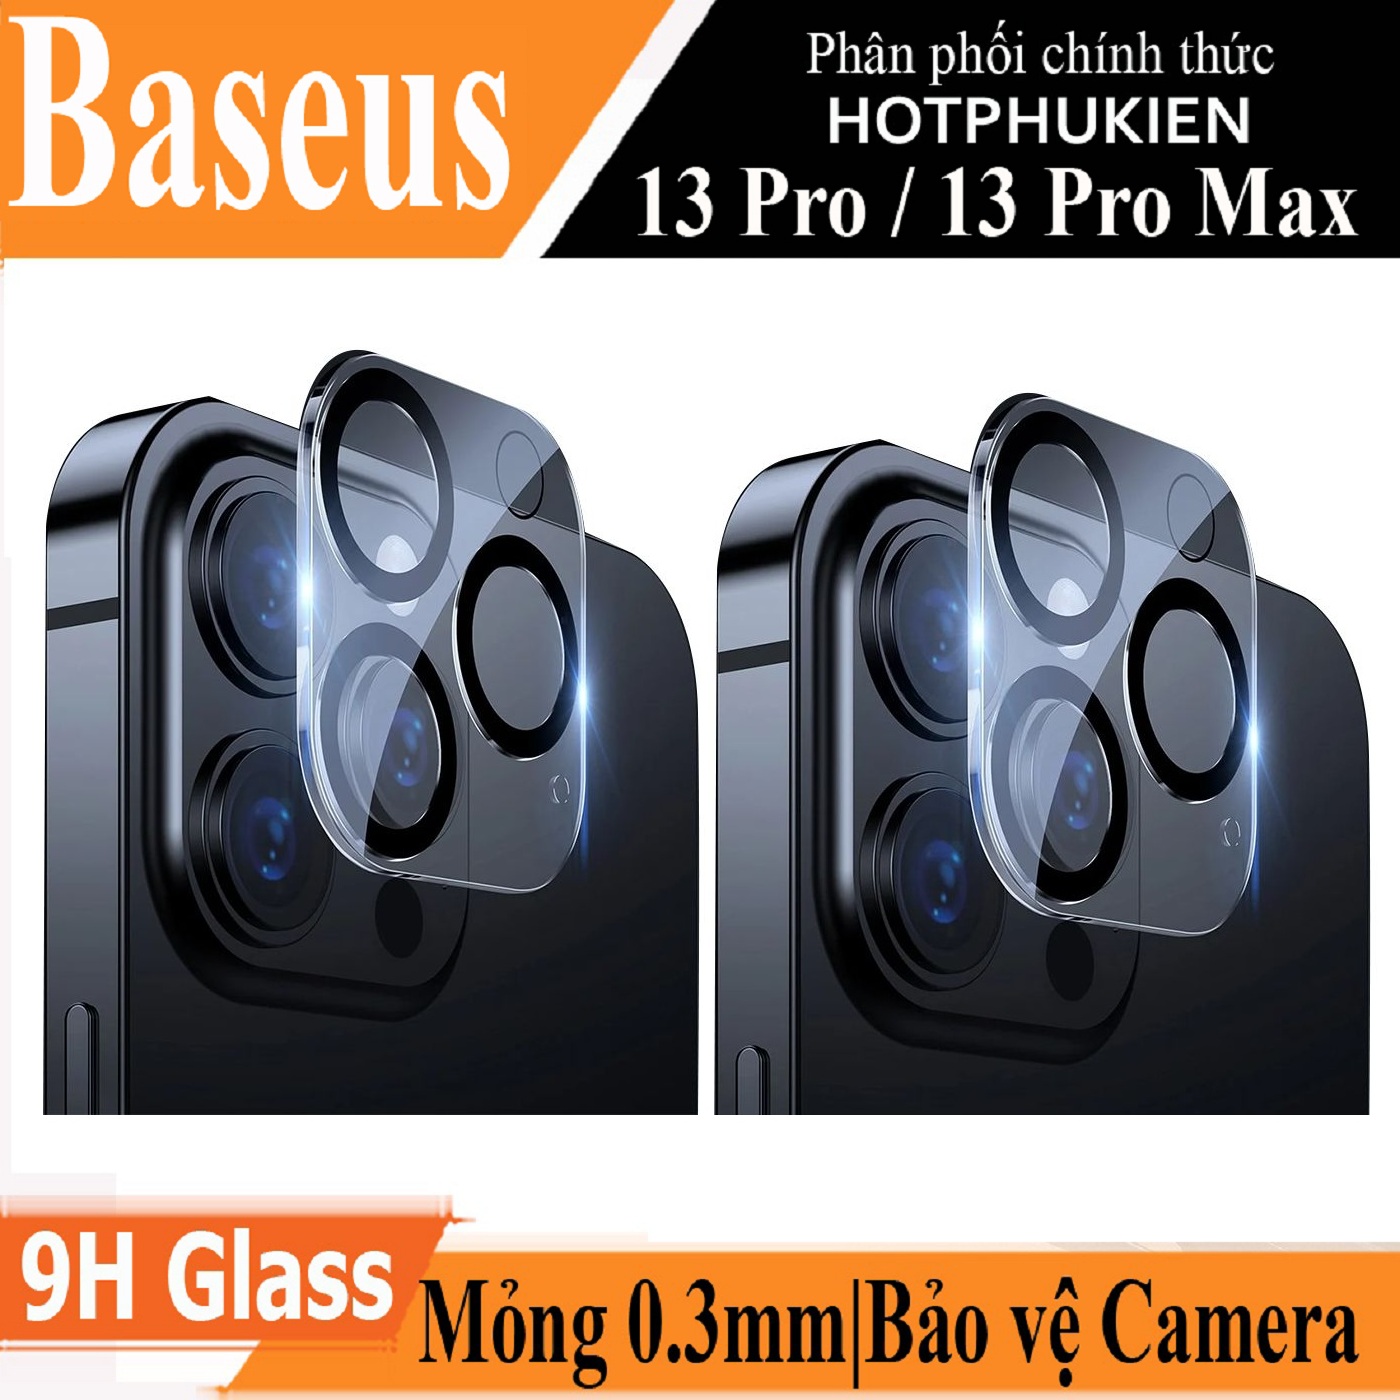 (Mua 1 tặng 1) Miếng dán kính cường lực bảo vệ camera cho iPhone 13 Pro Max hiệu Baseus Full-coverage Lens